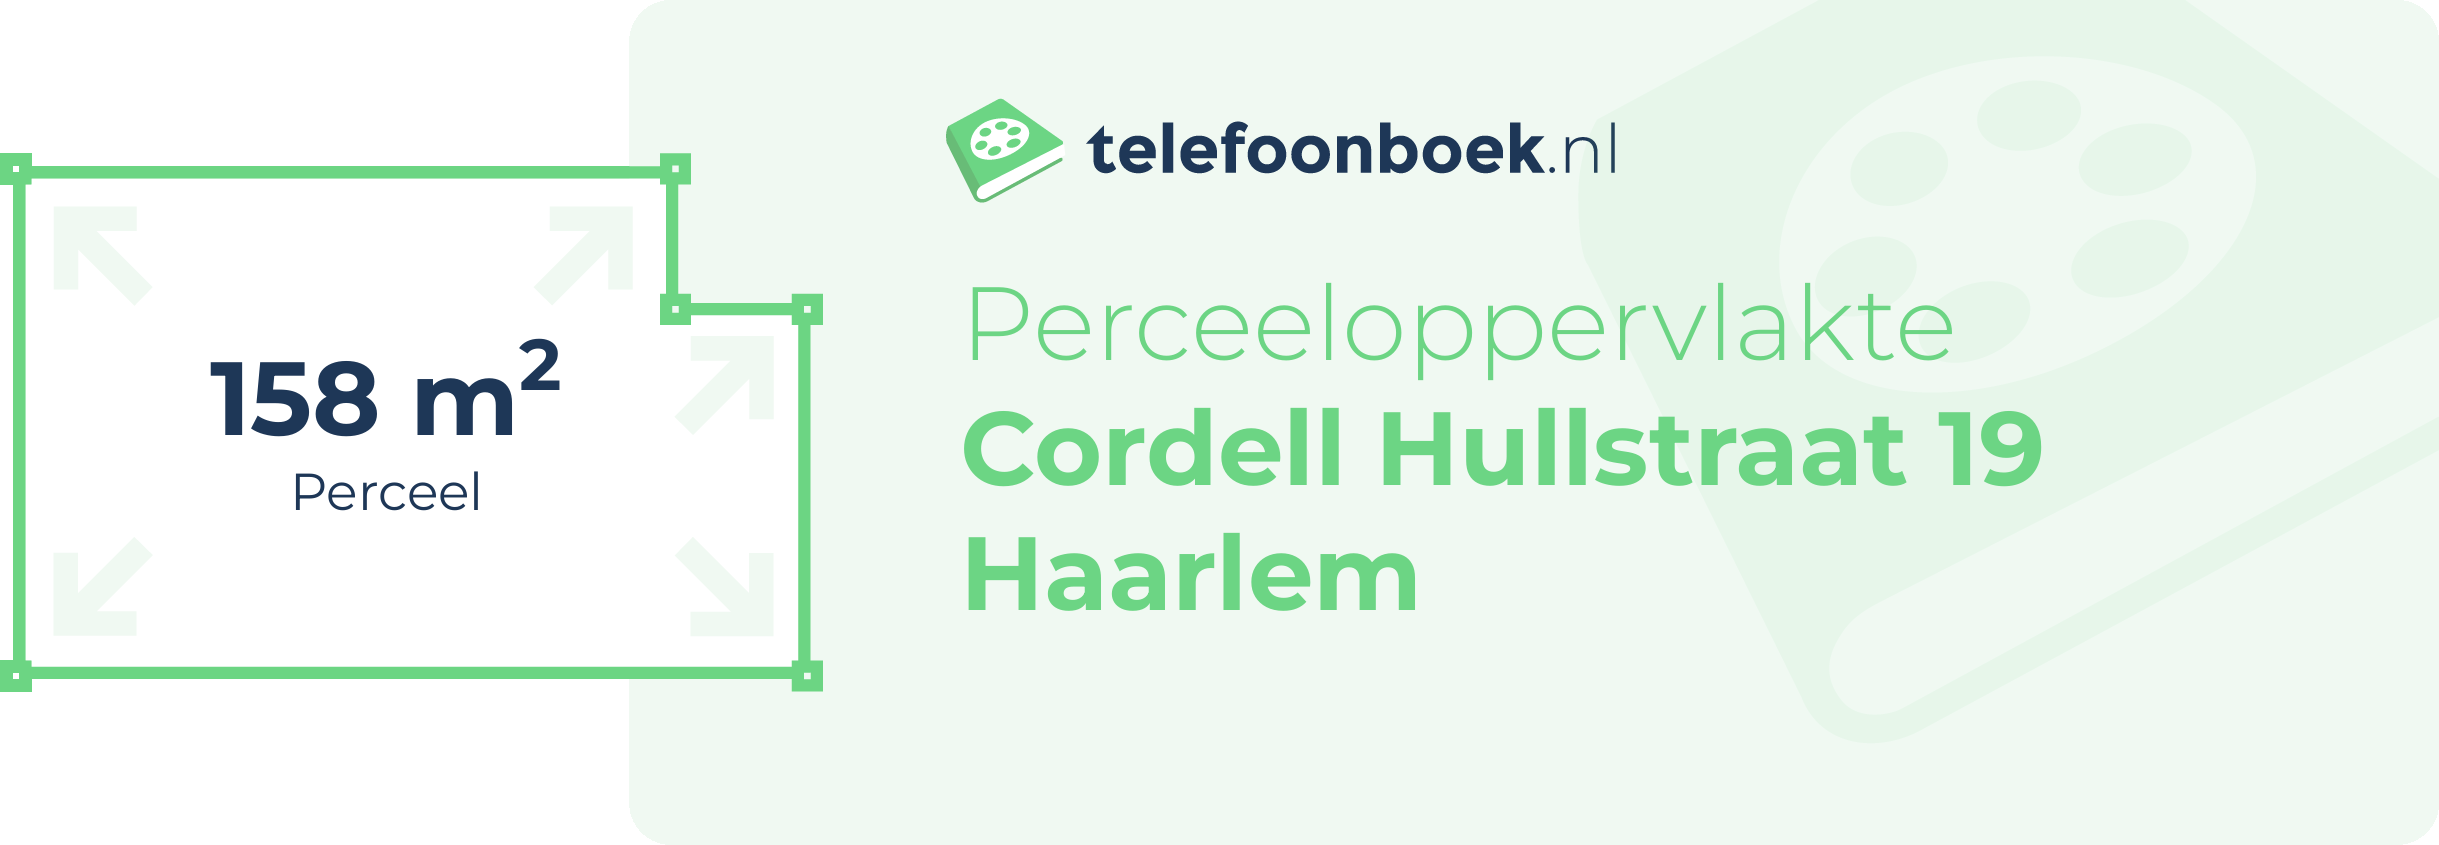 Perceeloppervlakte Cordell Hullstraat 19 Haarlem